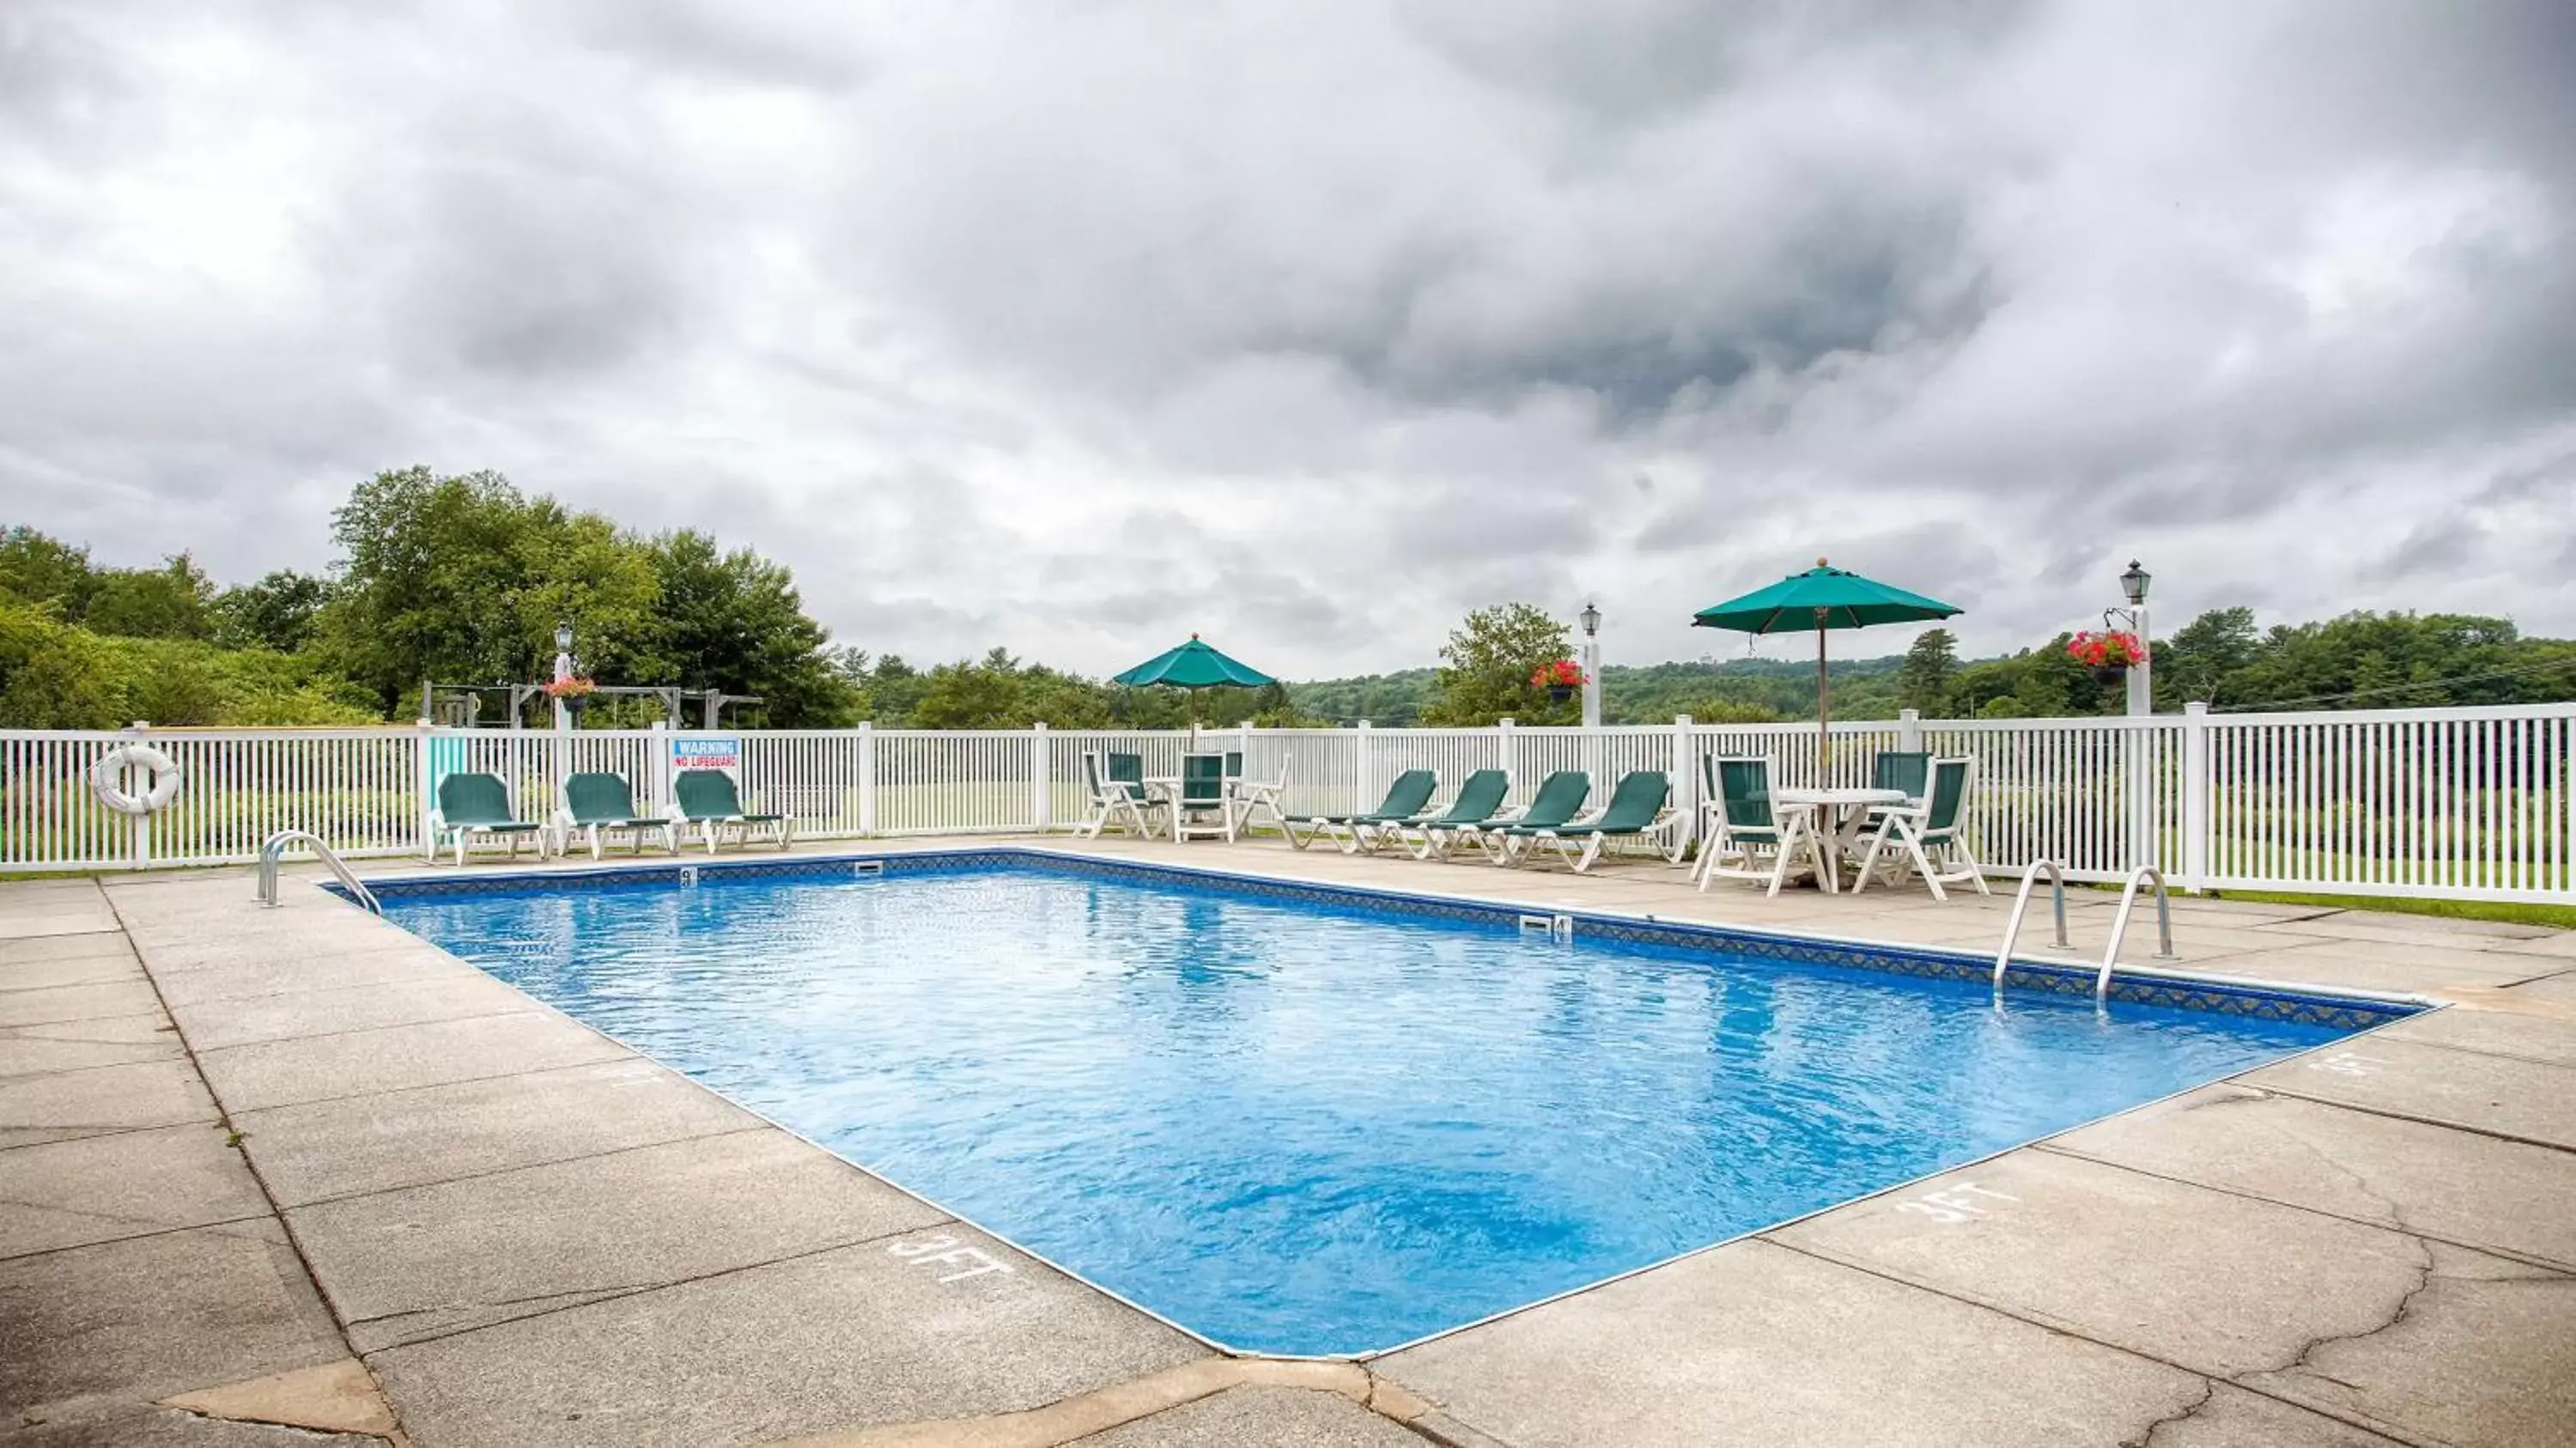 On site, Swimming Pool in Best Western - Freeport Inn